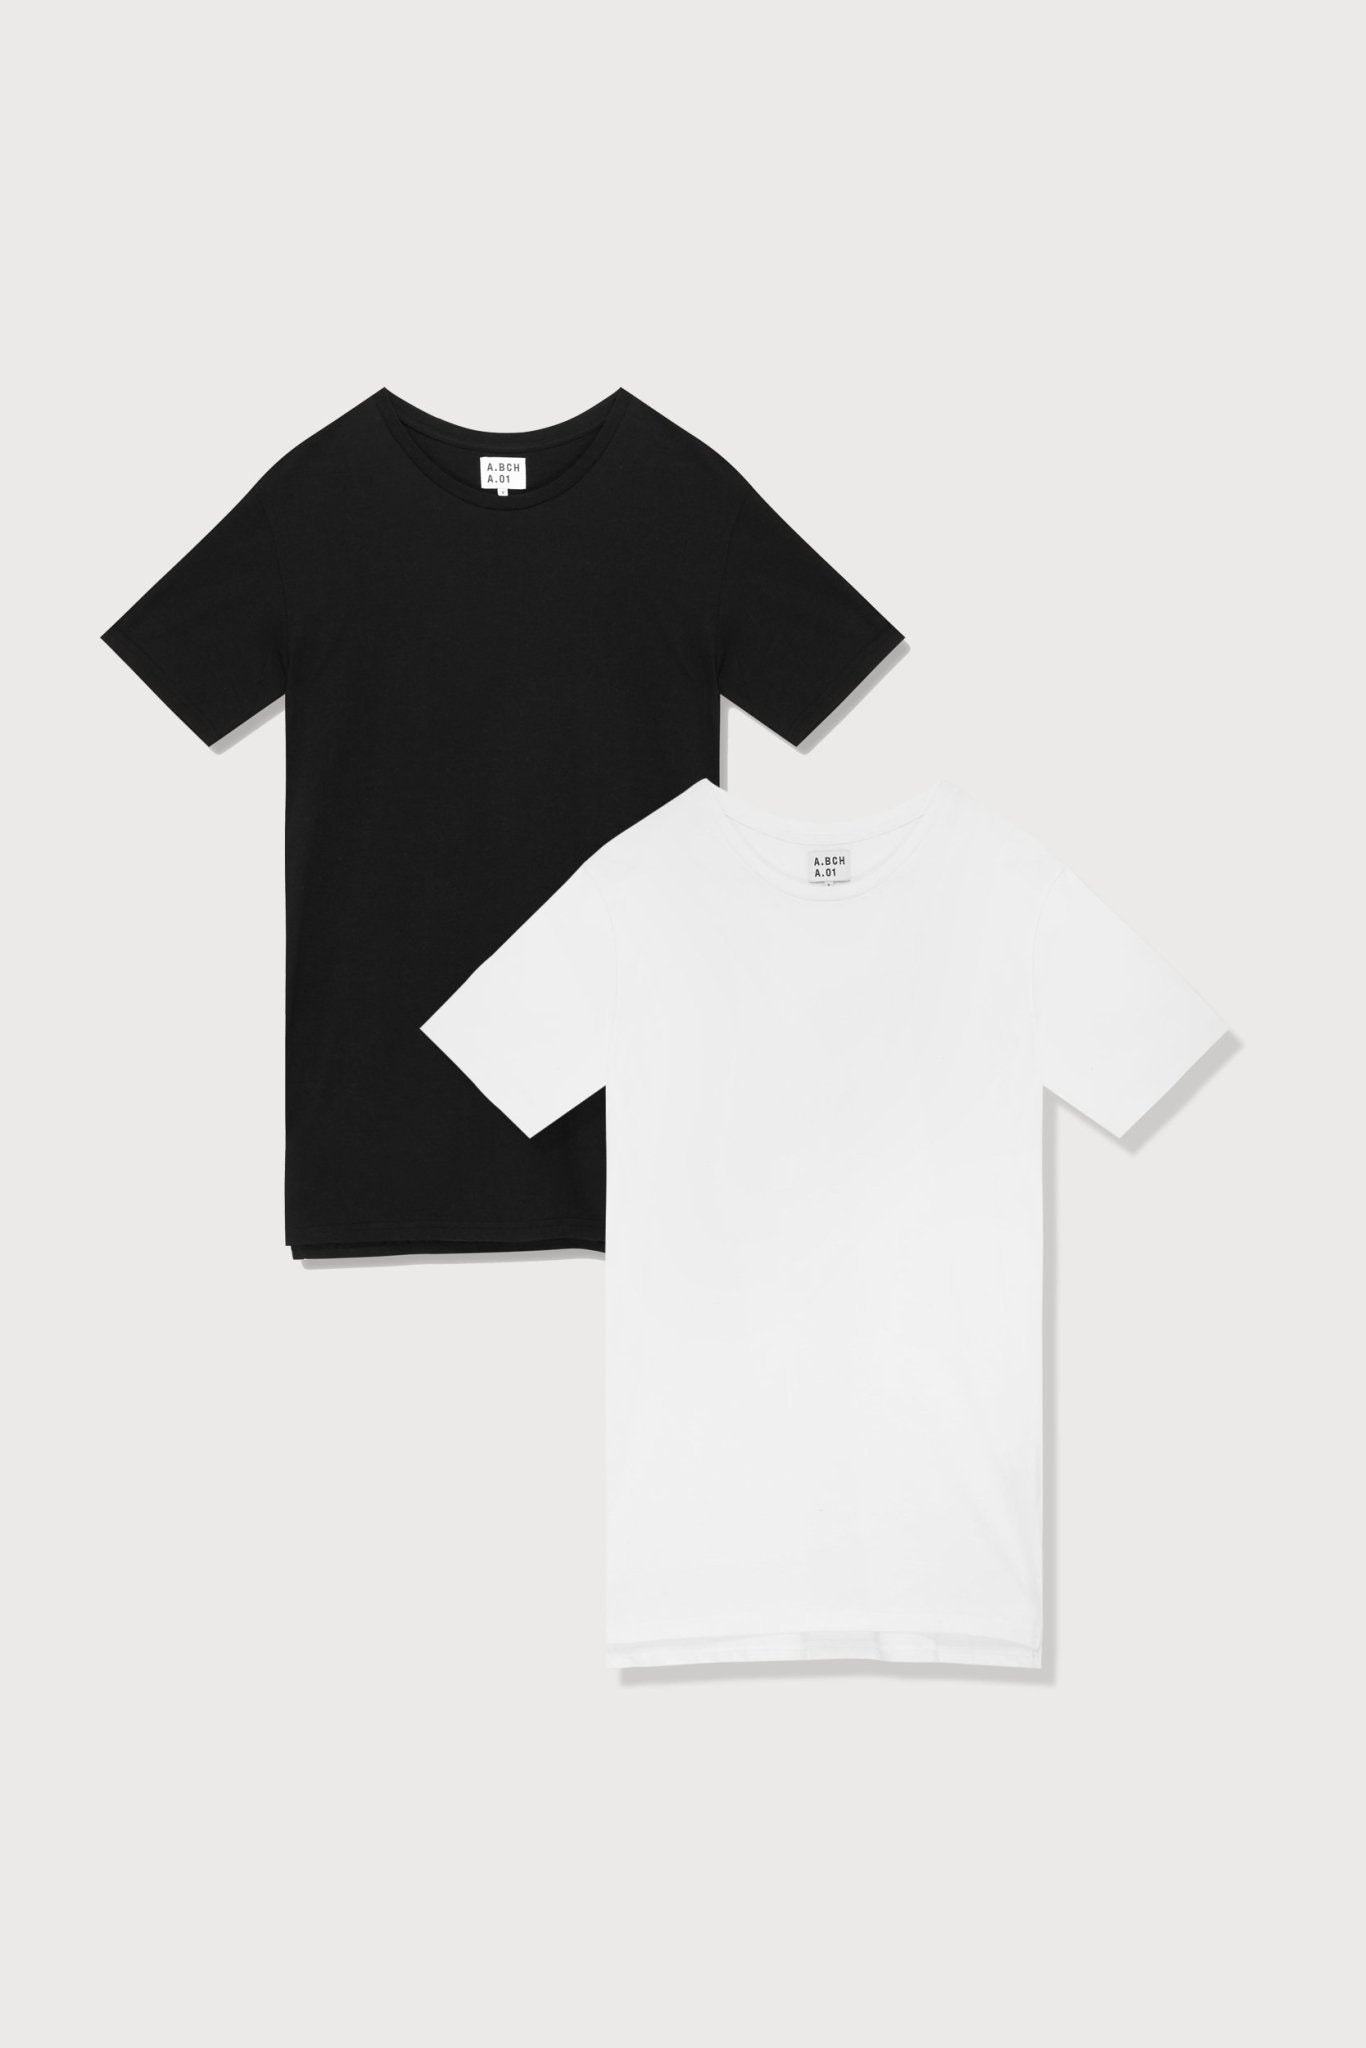 A.BCH A.01 Black + White T-Shirt Set in Organic Cotton